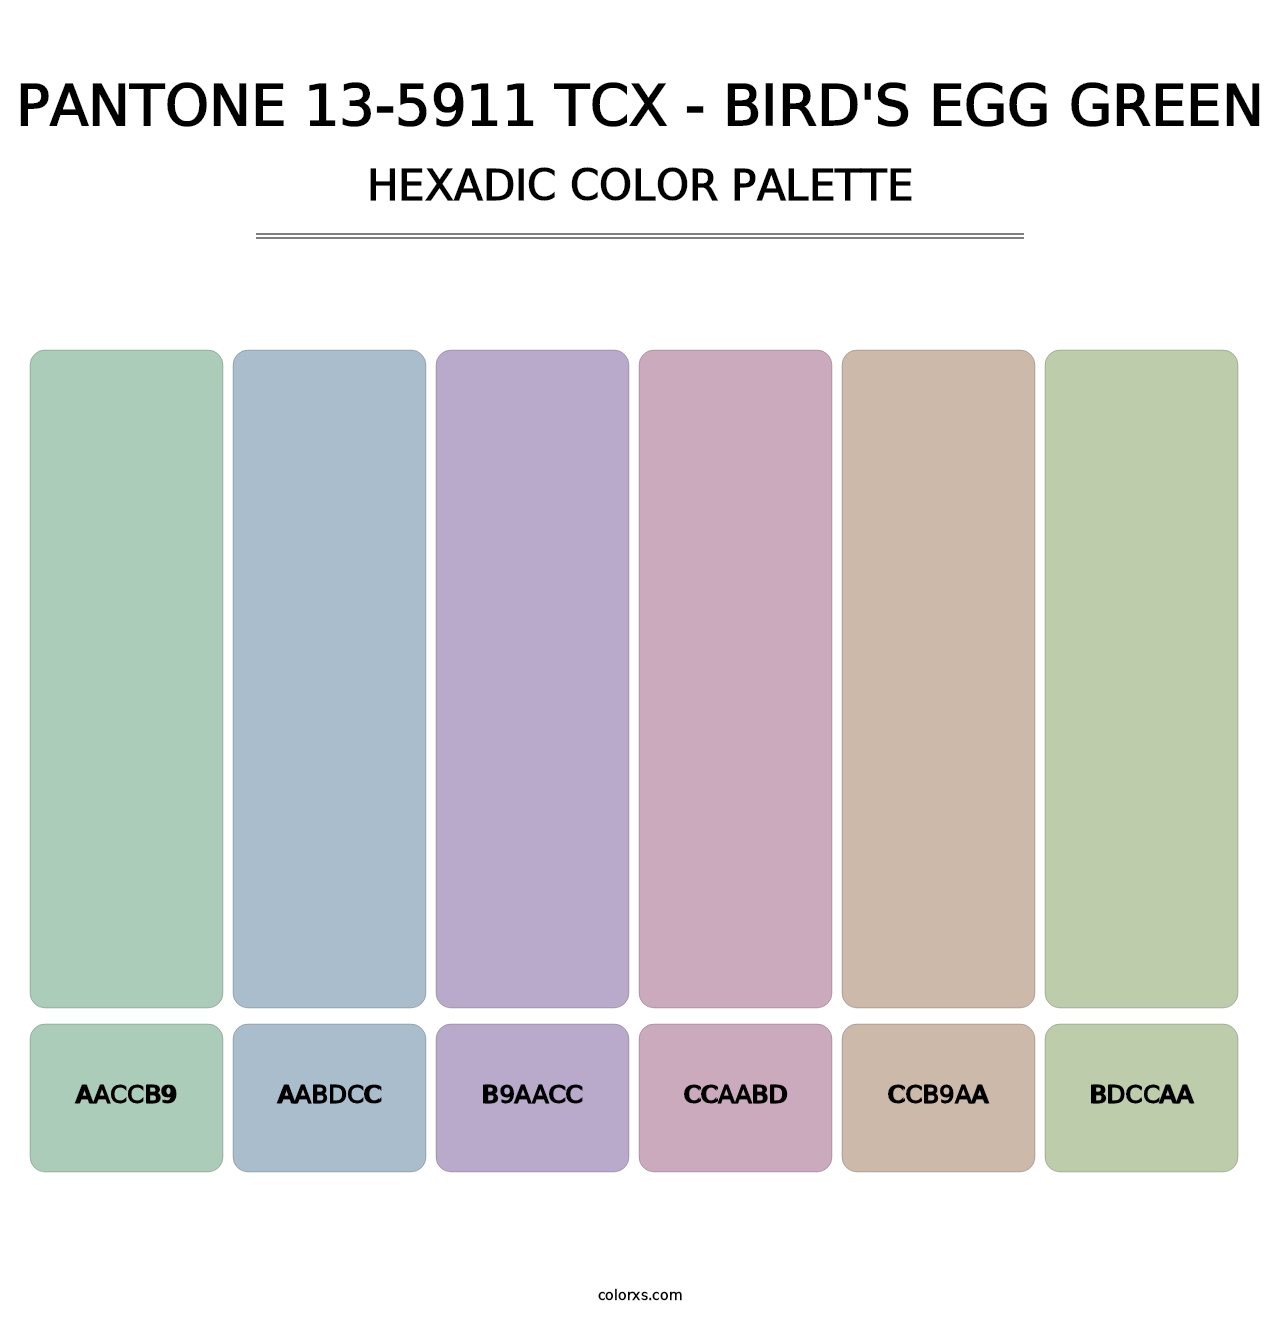 PANTONE 13-5911 TCX - Bird's Egg Green - Hexadic Color Palette